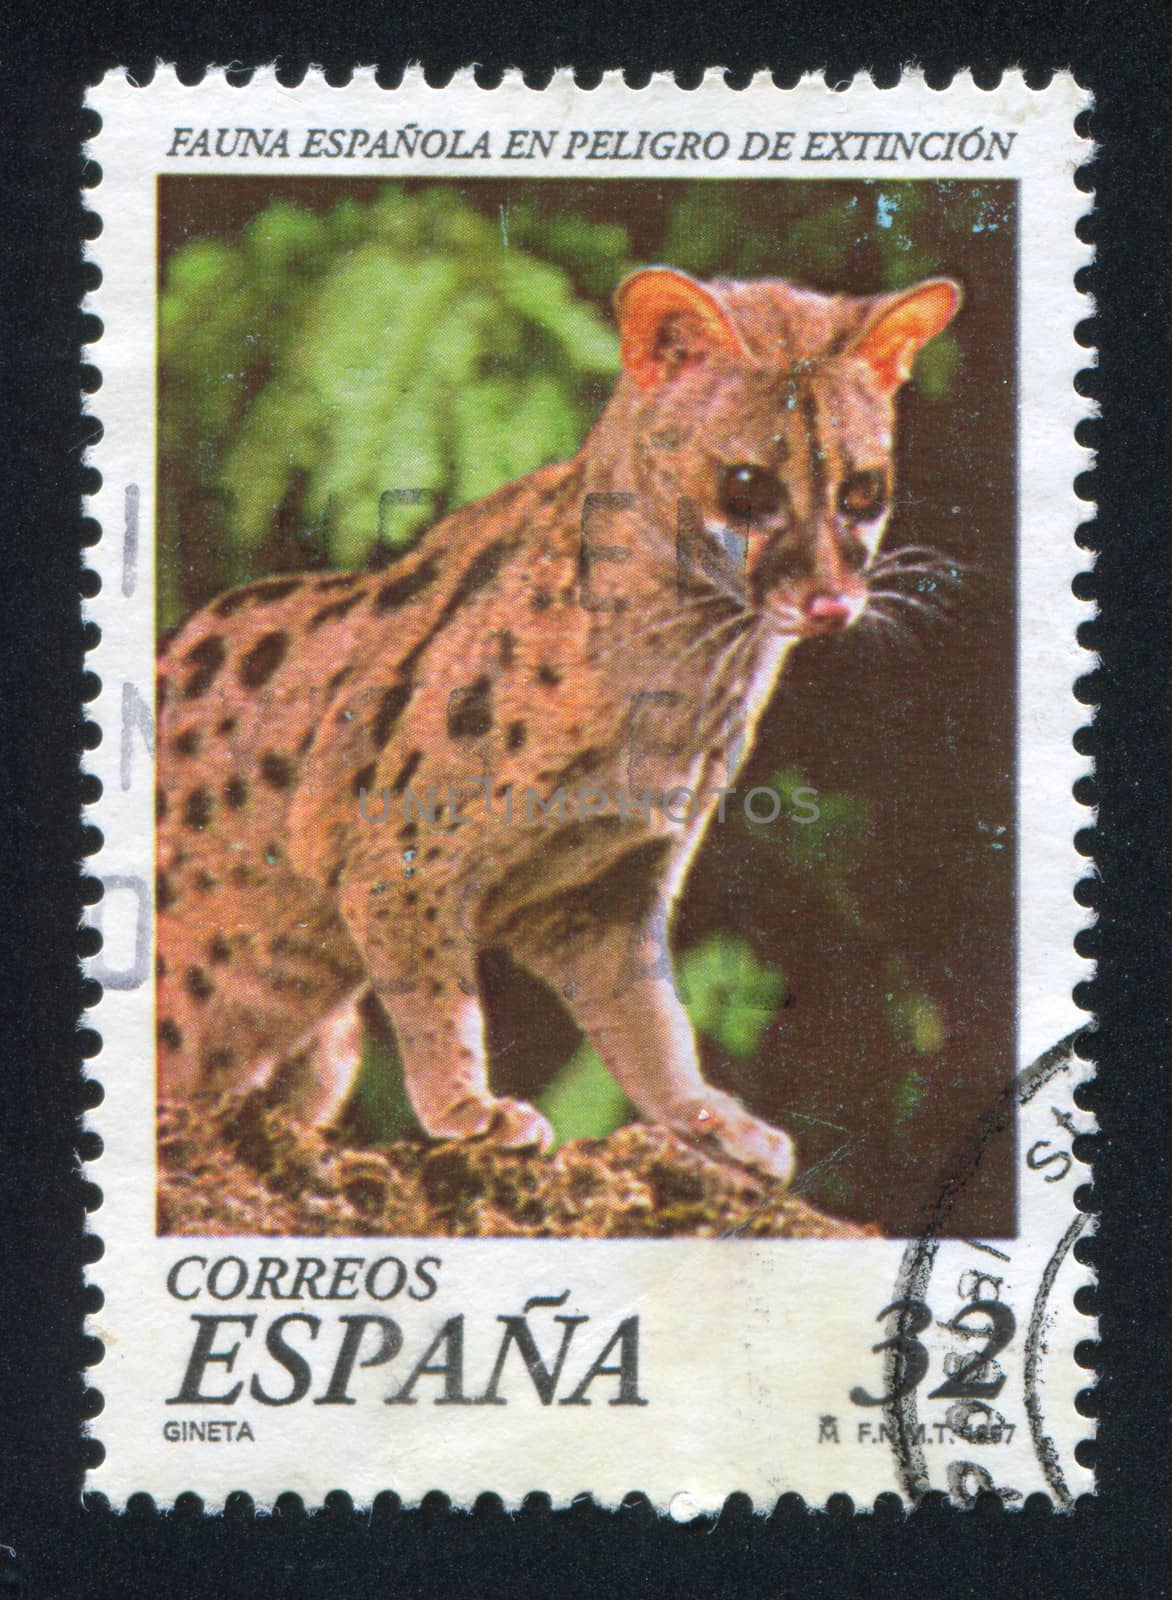 SPAIN - CIRCA 1997: stamp printed by Spain, shows Genette, circa 1997